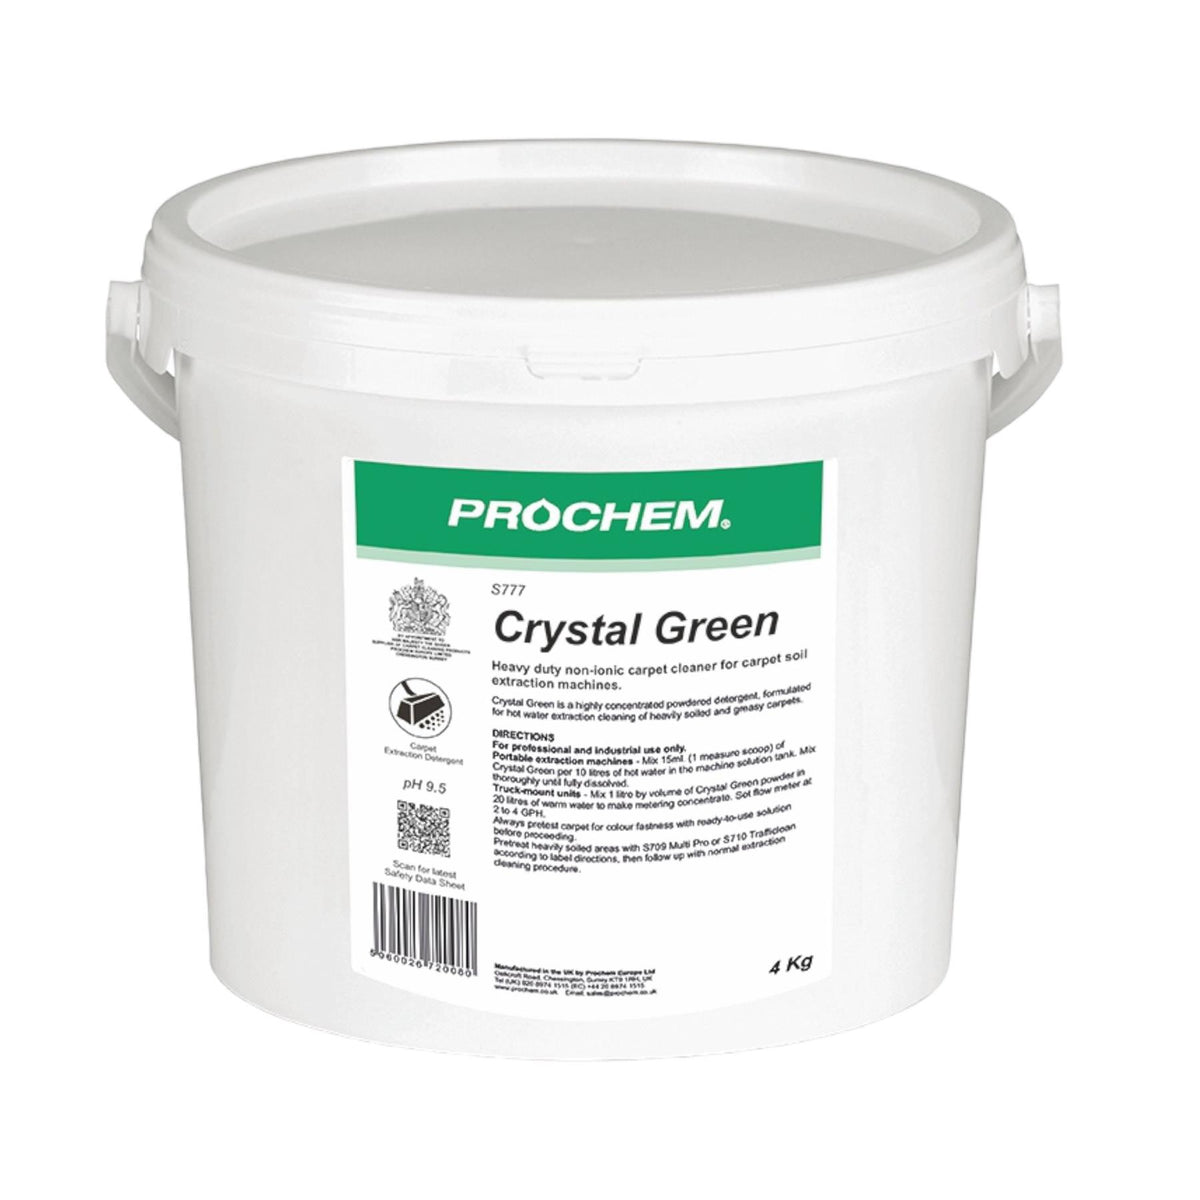 Prochem Crystal Green 4KG tub Heavy Duty Non-Ionic Carpet Cleaner